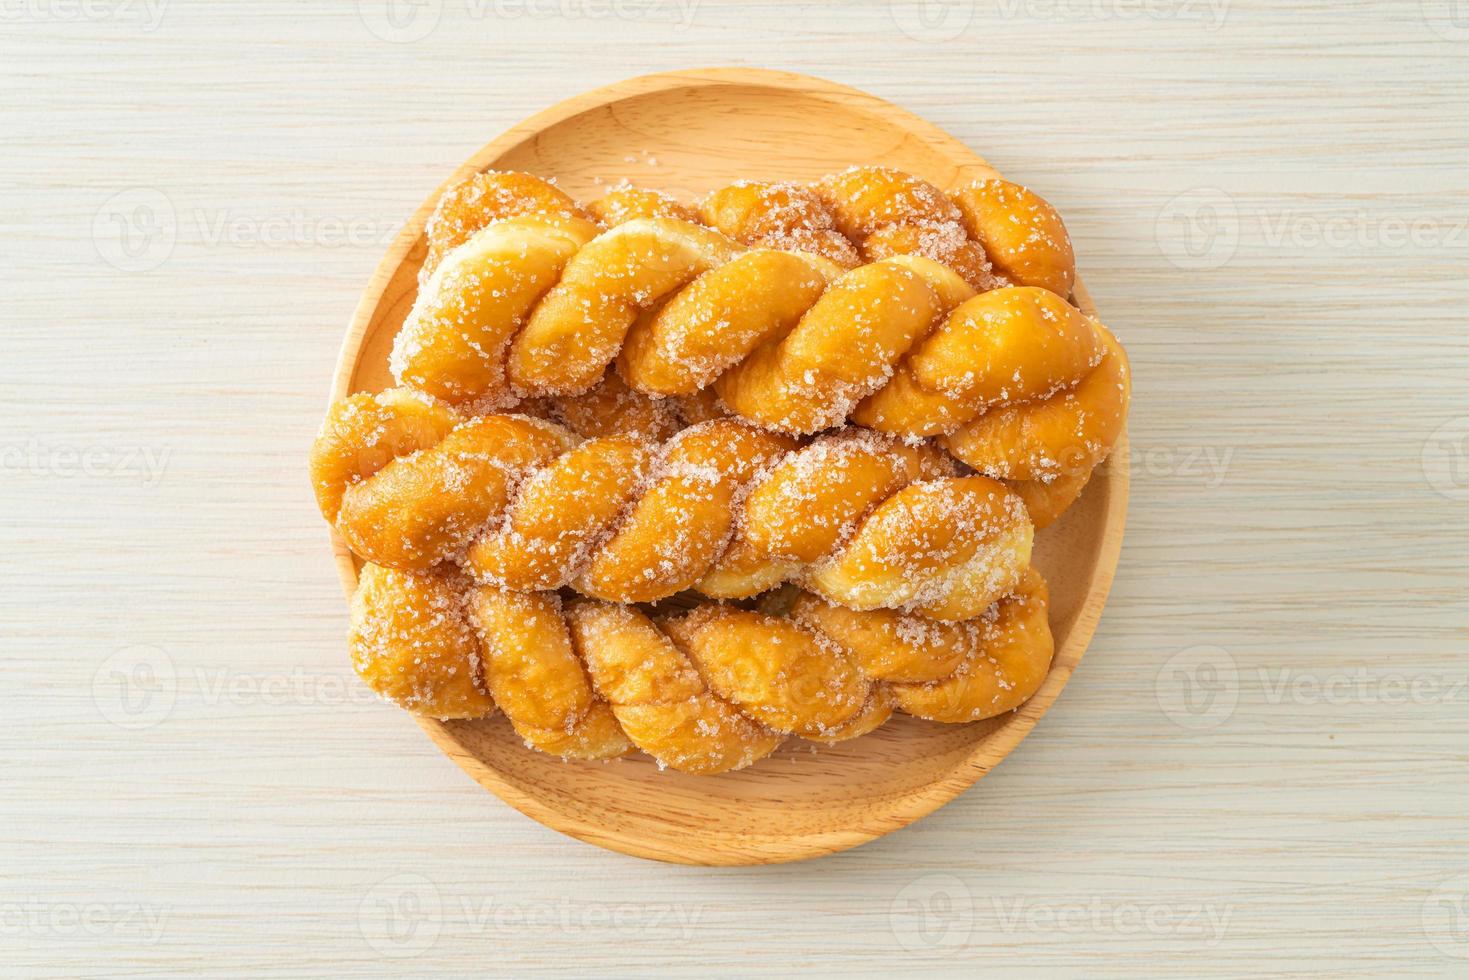 Sugar doughnut in a spiral shape on wooden plate photo